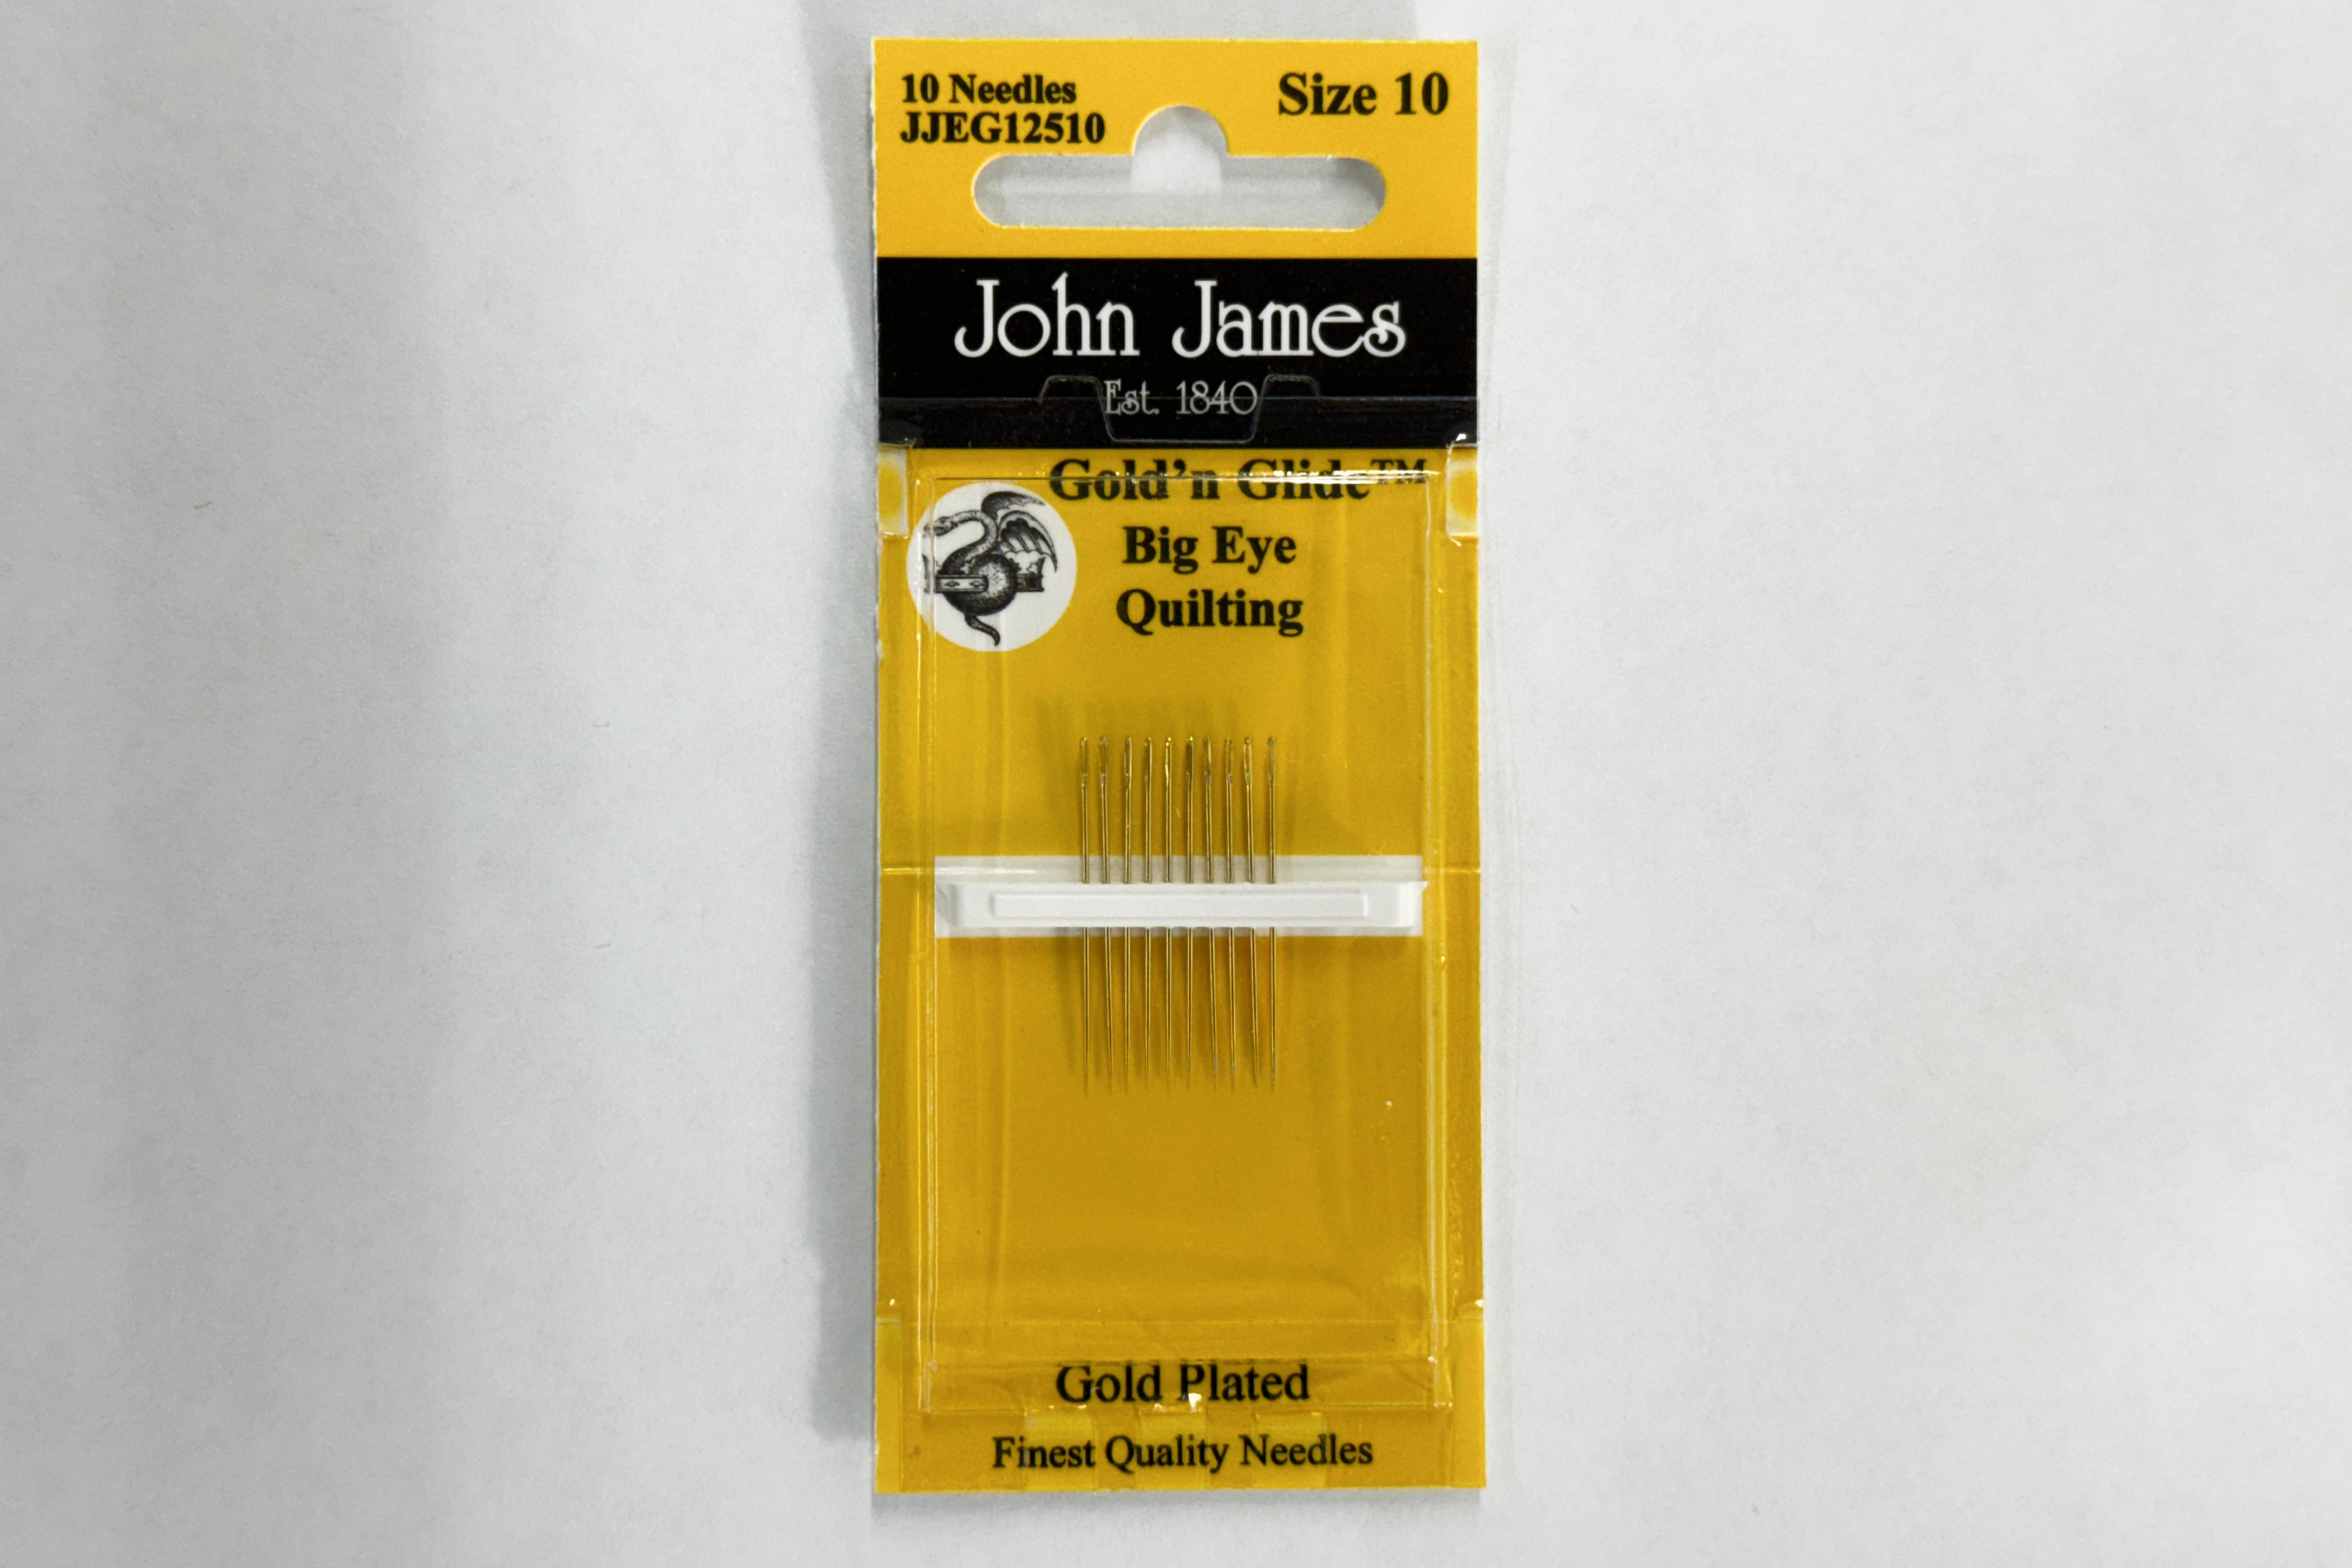 John James Needles - Gold`n Glide Quilting Big Eye Needles